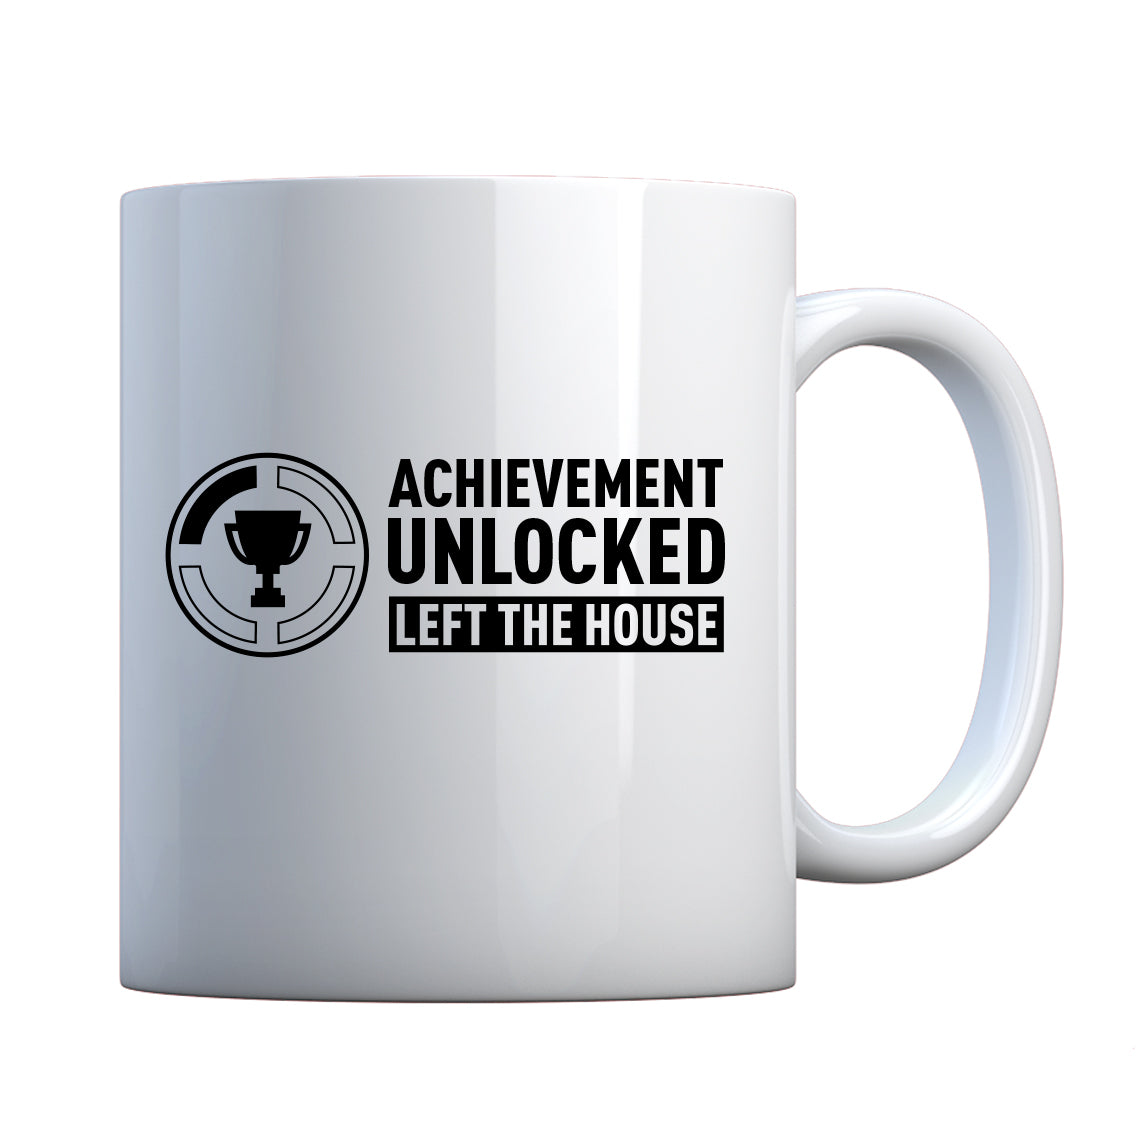 Achievement Unlocked Left The House Ceramic Gift Mug